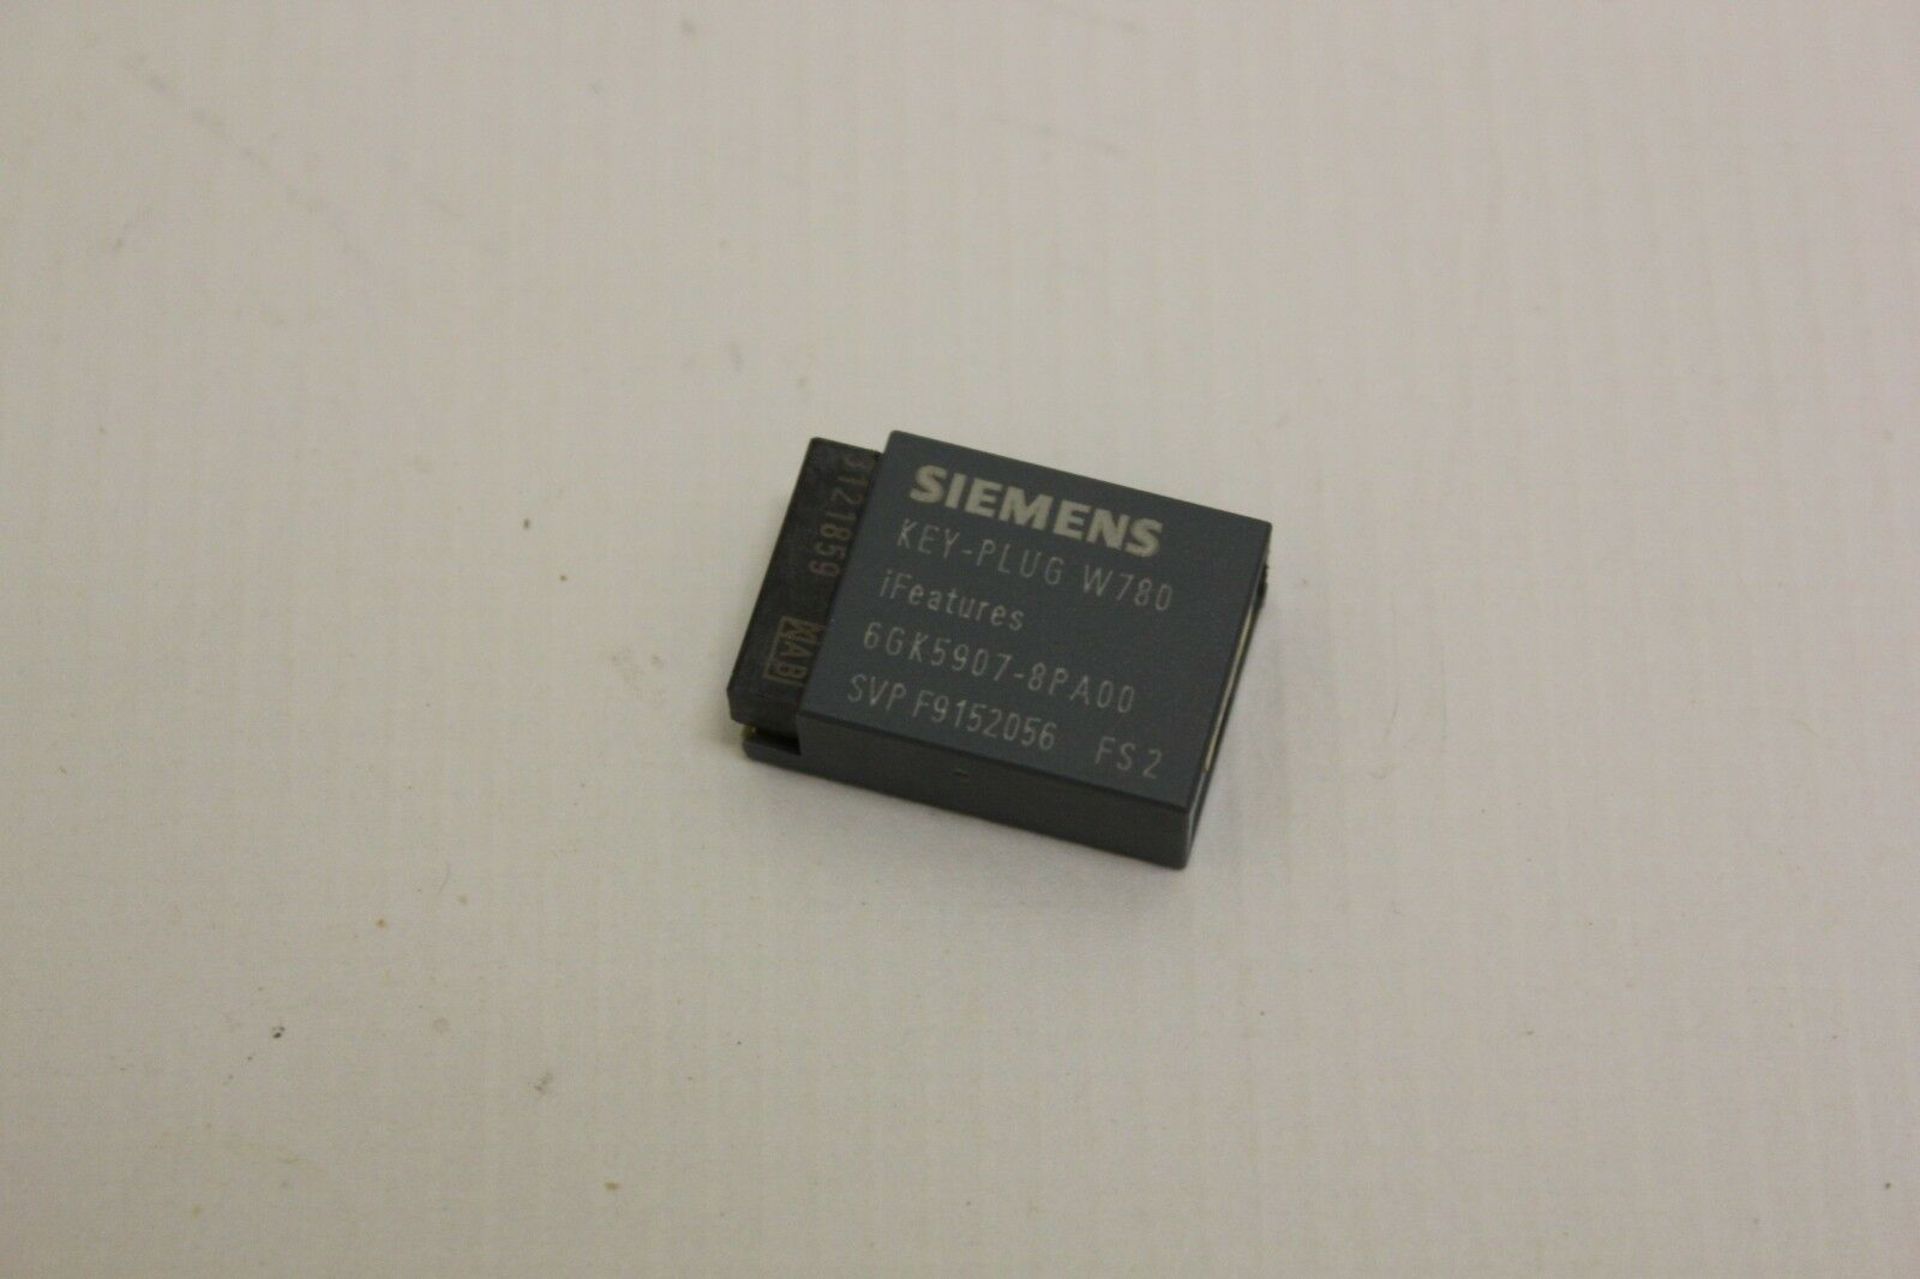 New SIEMENS Simatic Net Key-Plug W780 6GK5907-8PA00 - Image 2 of 3